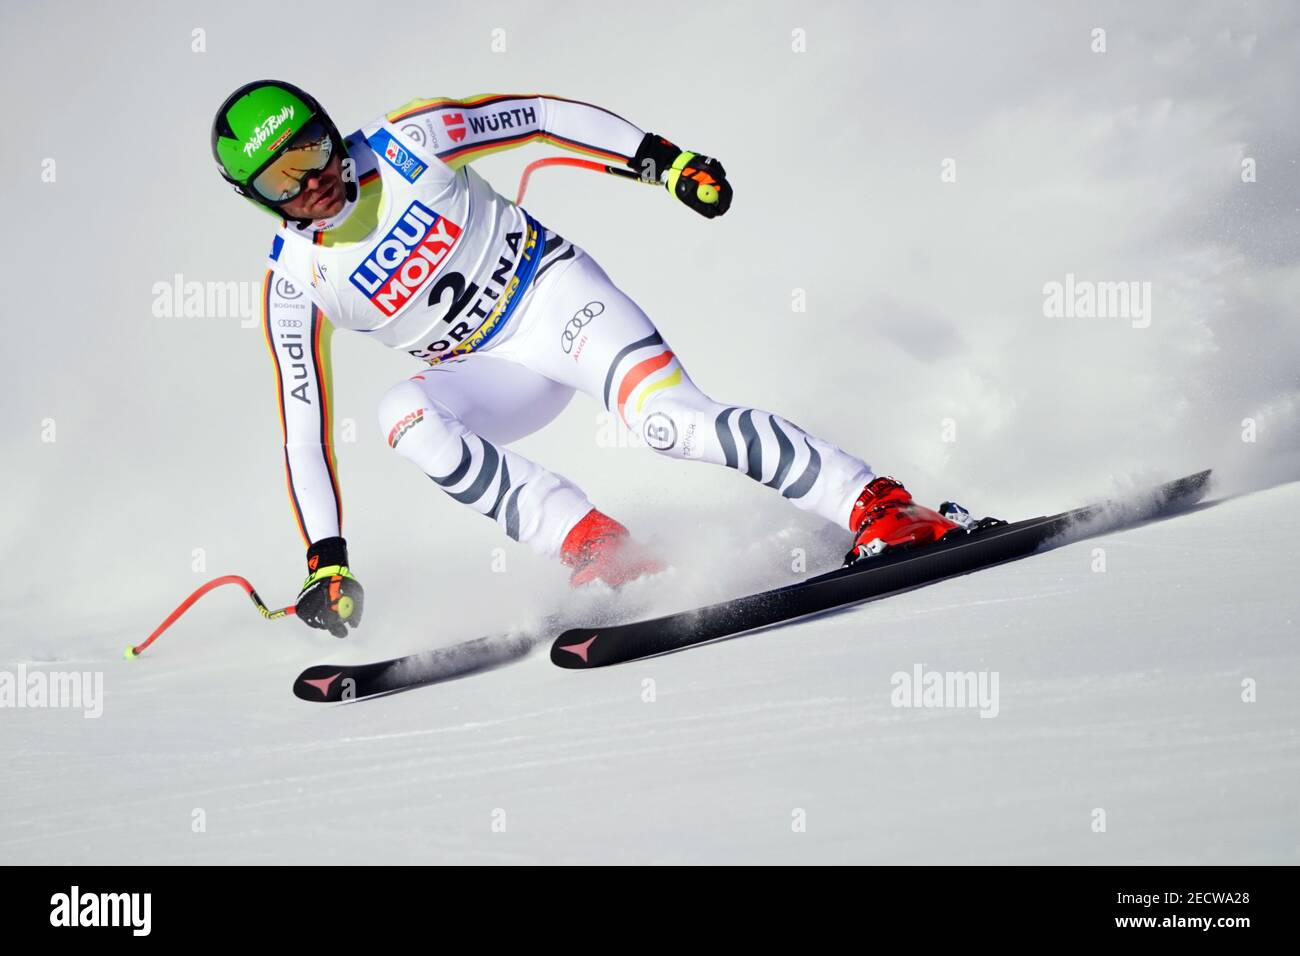 14 February 2021, Italy, Cortina d'Ampezzo: Alpine Skiing: World Championship, Downhill, Men: Andreas Sander from Germany Photo: Michael Kappeler/dpa Stock Photo